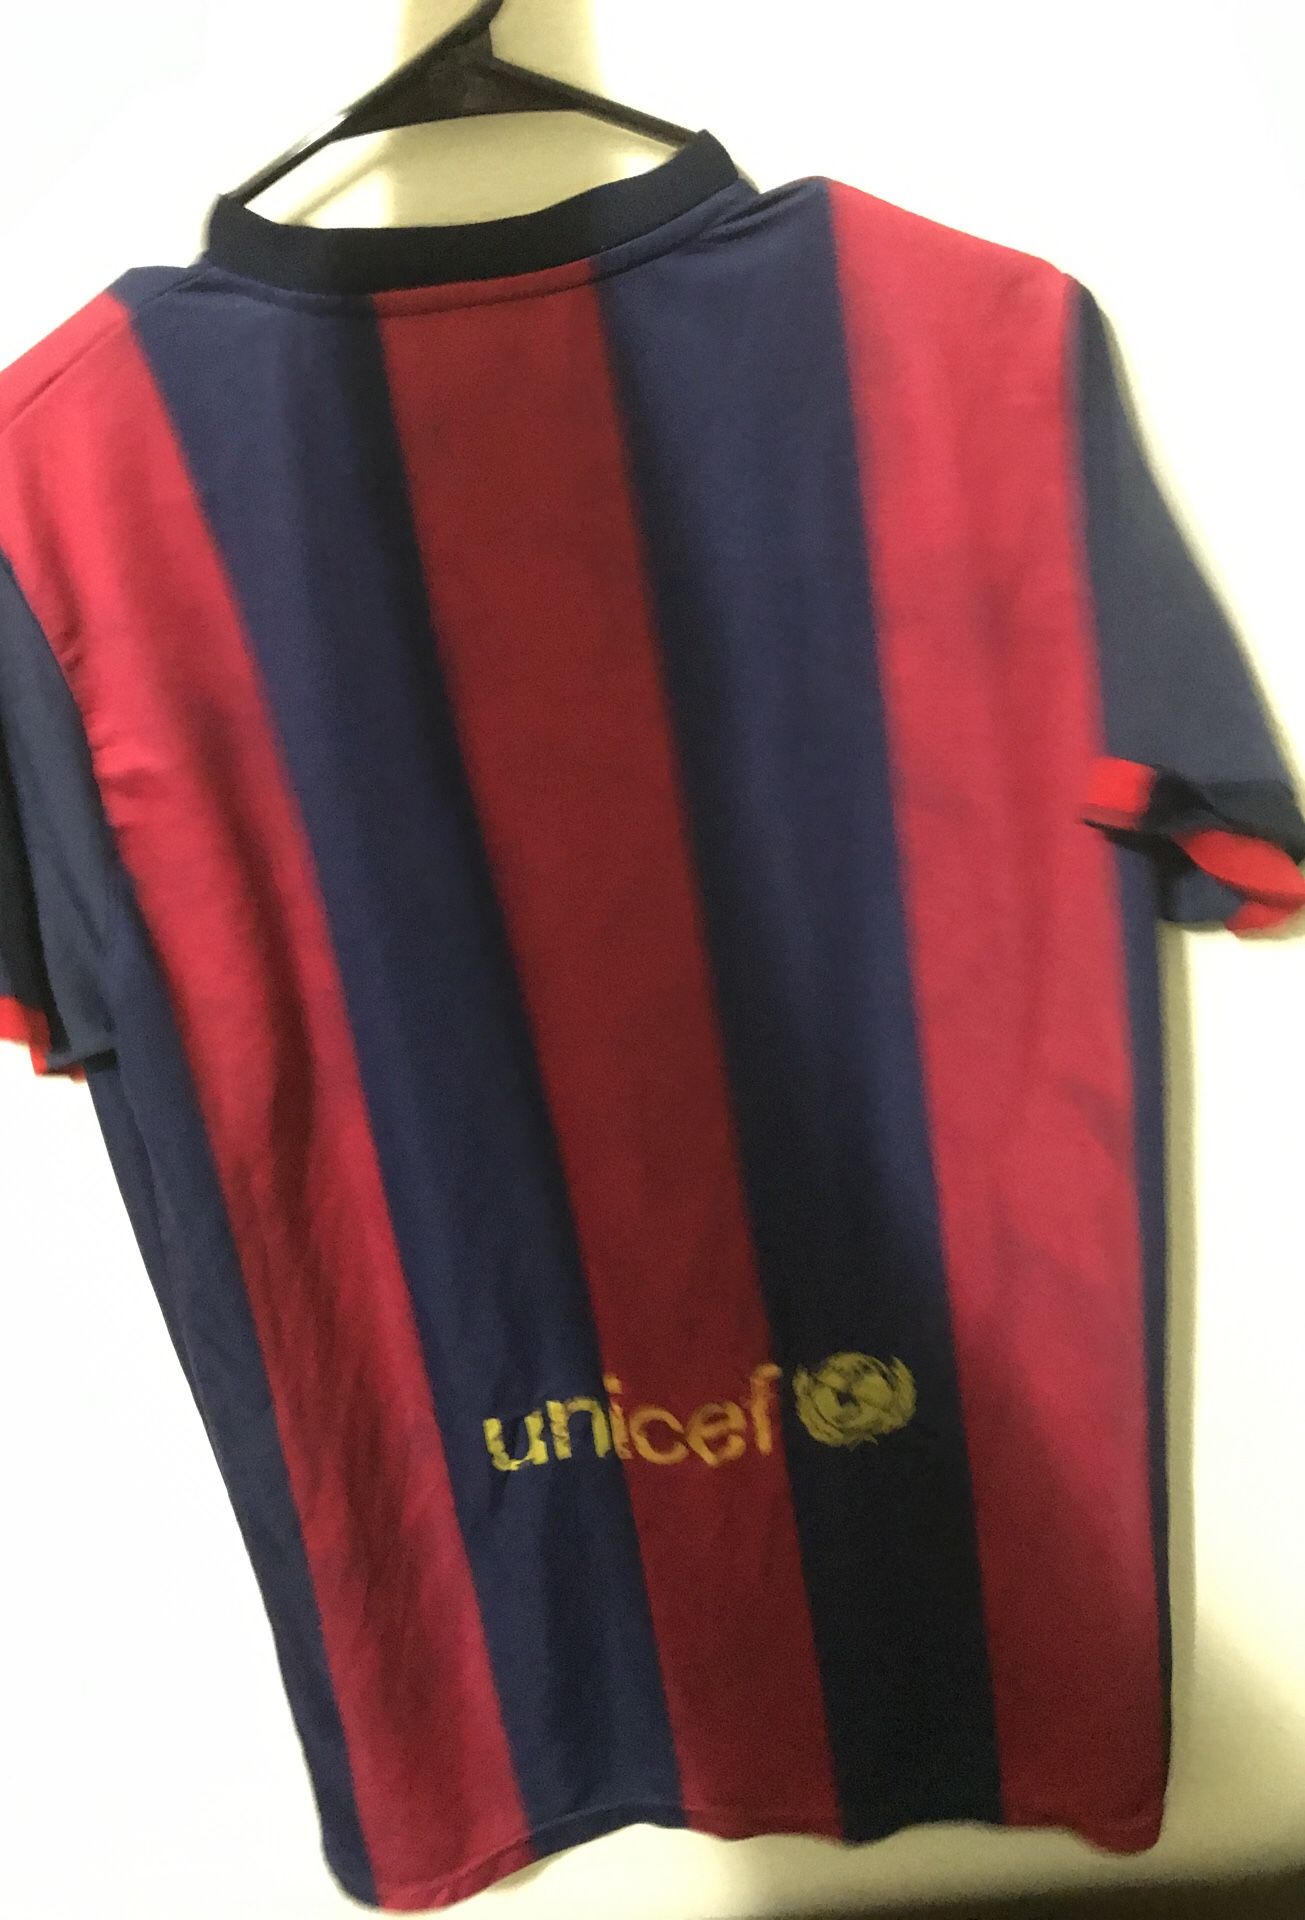 Barcelona jersey